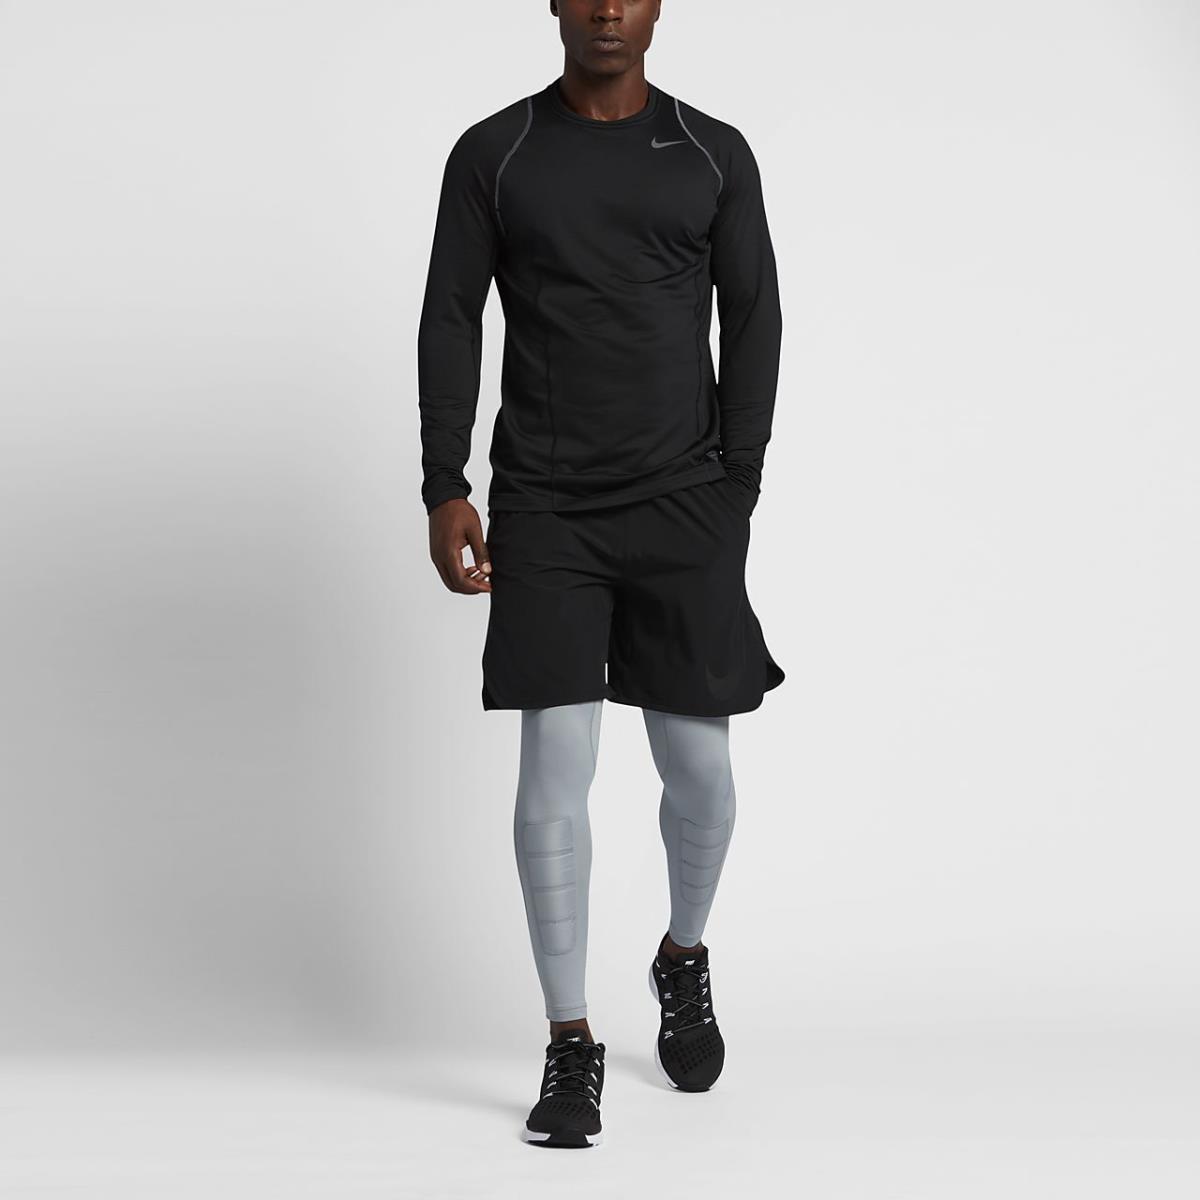 Nike clothing Pro Hyperwarm Aeroloft - Gray 4